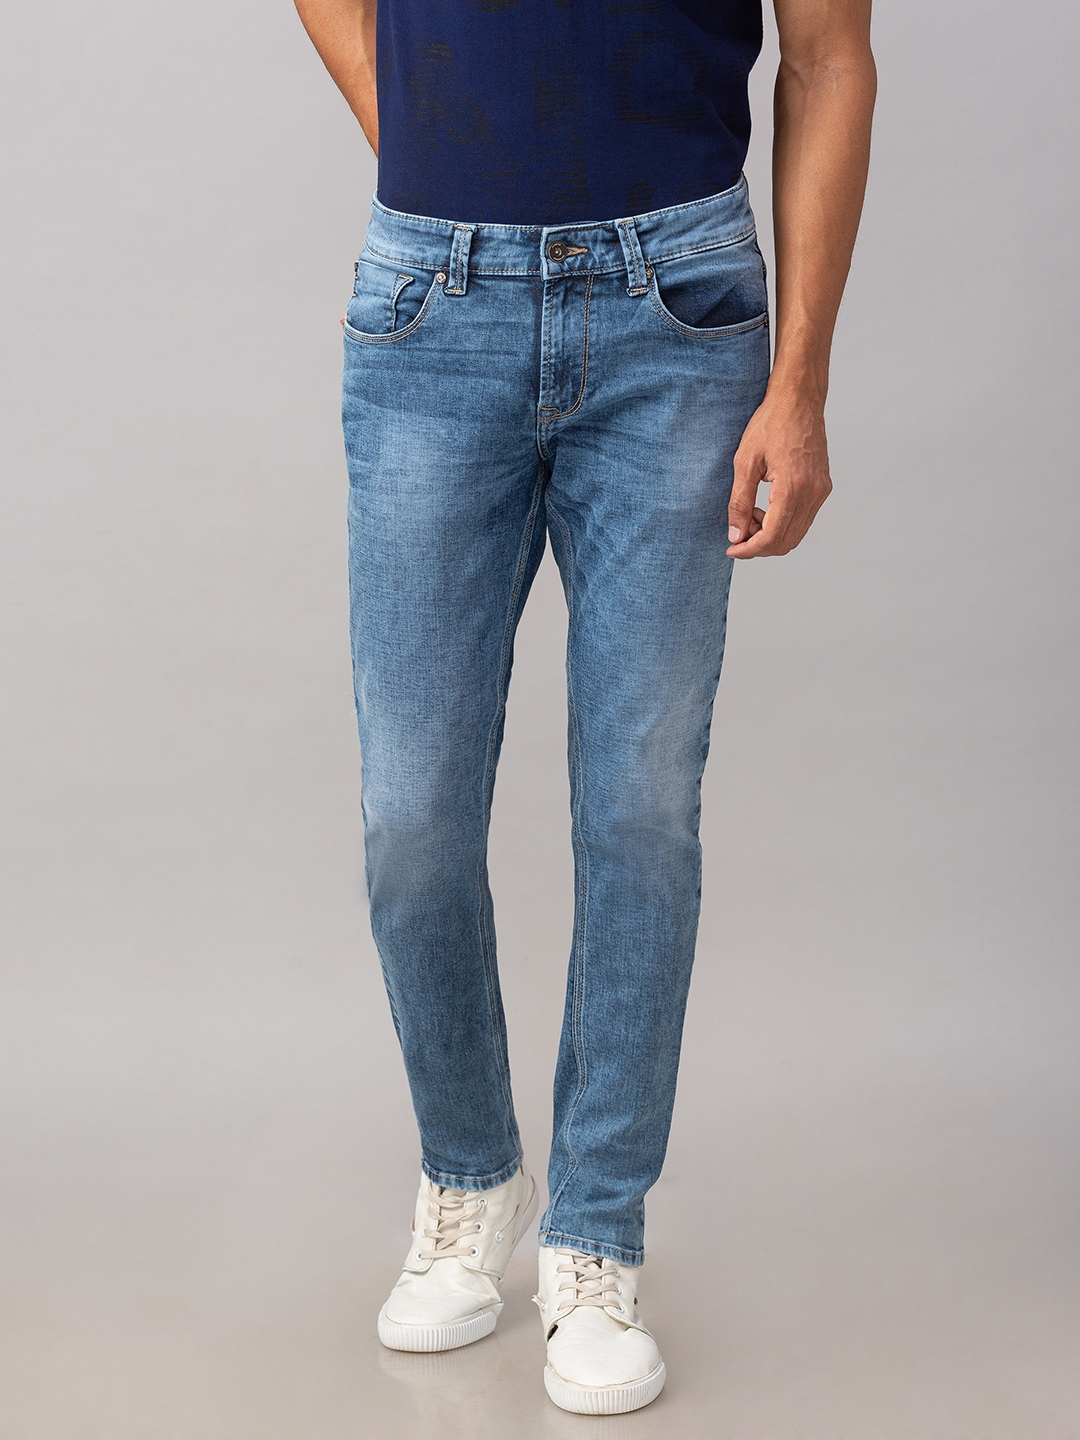 SPYKAR | Spykar Blue Cotton Low Rise Super Skinny Fit Jeans (Super Skinny)